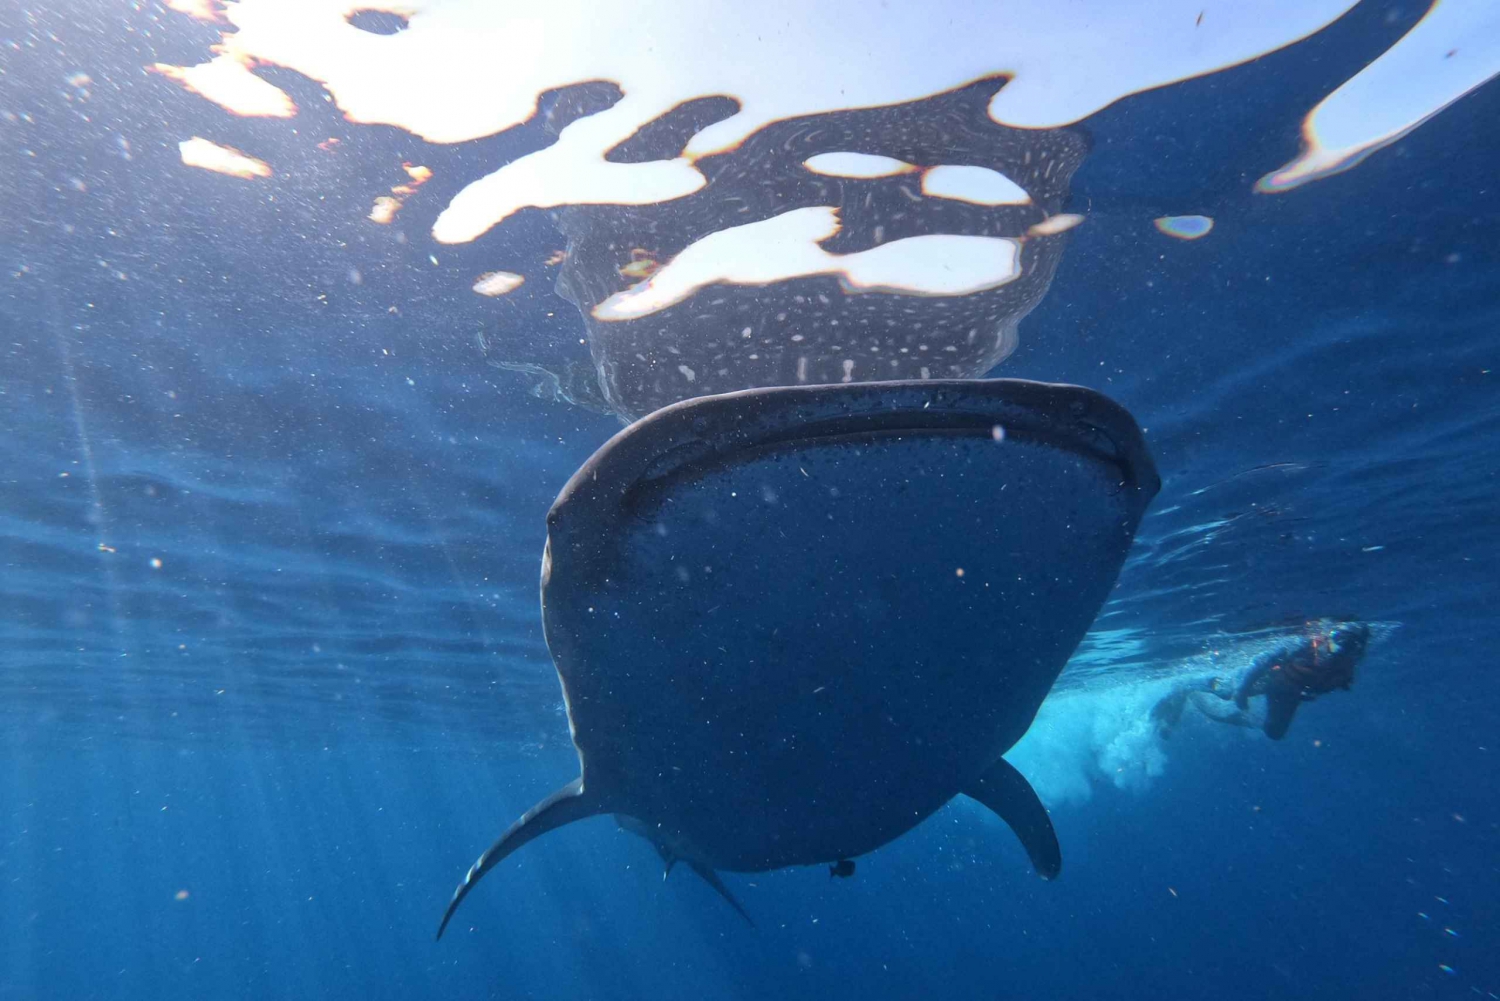 Cancun & Riviera Maya: Swim with Whale Sharks Tour w/ Lunch